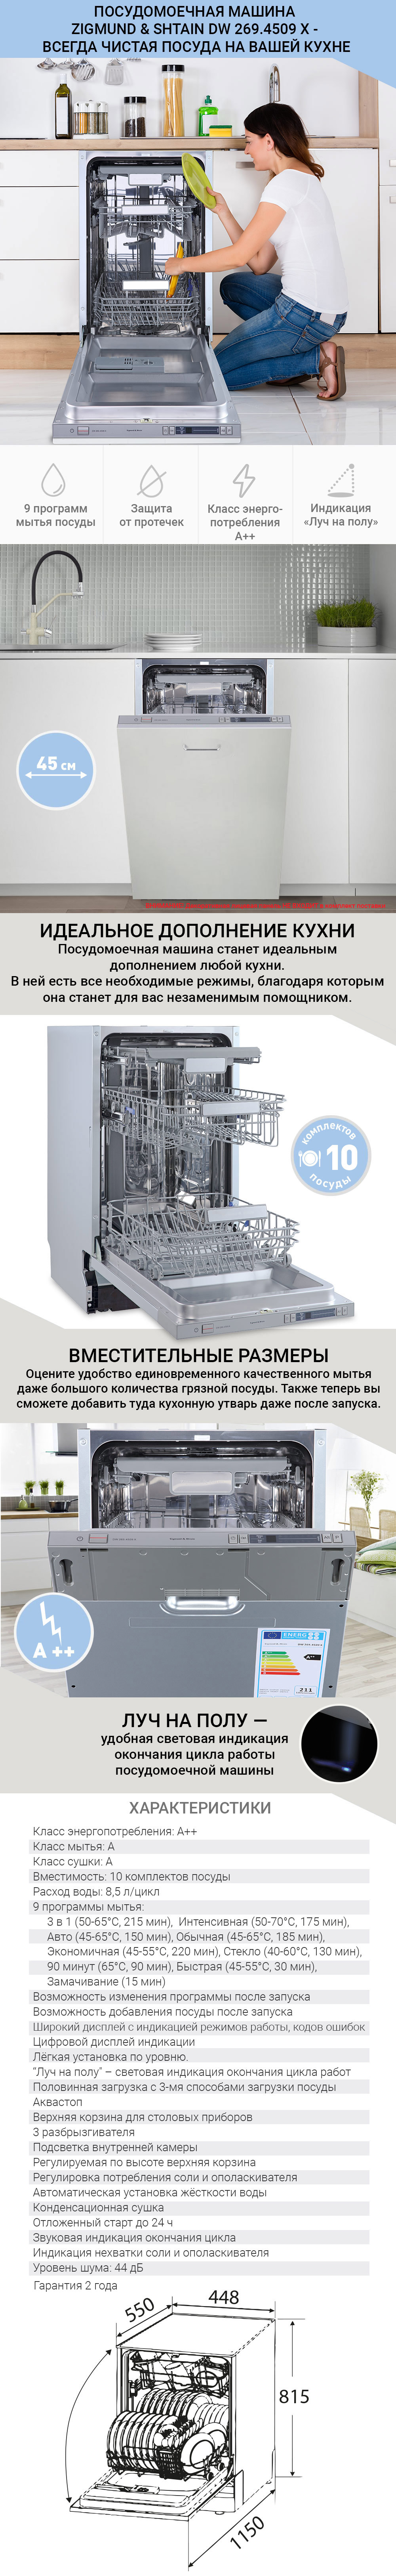 Посудомоечная машина Zigmund & Shtain DW 269.4509 X